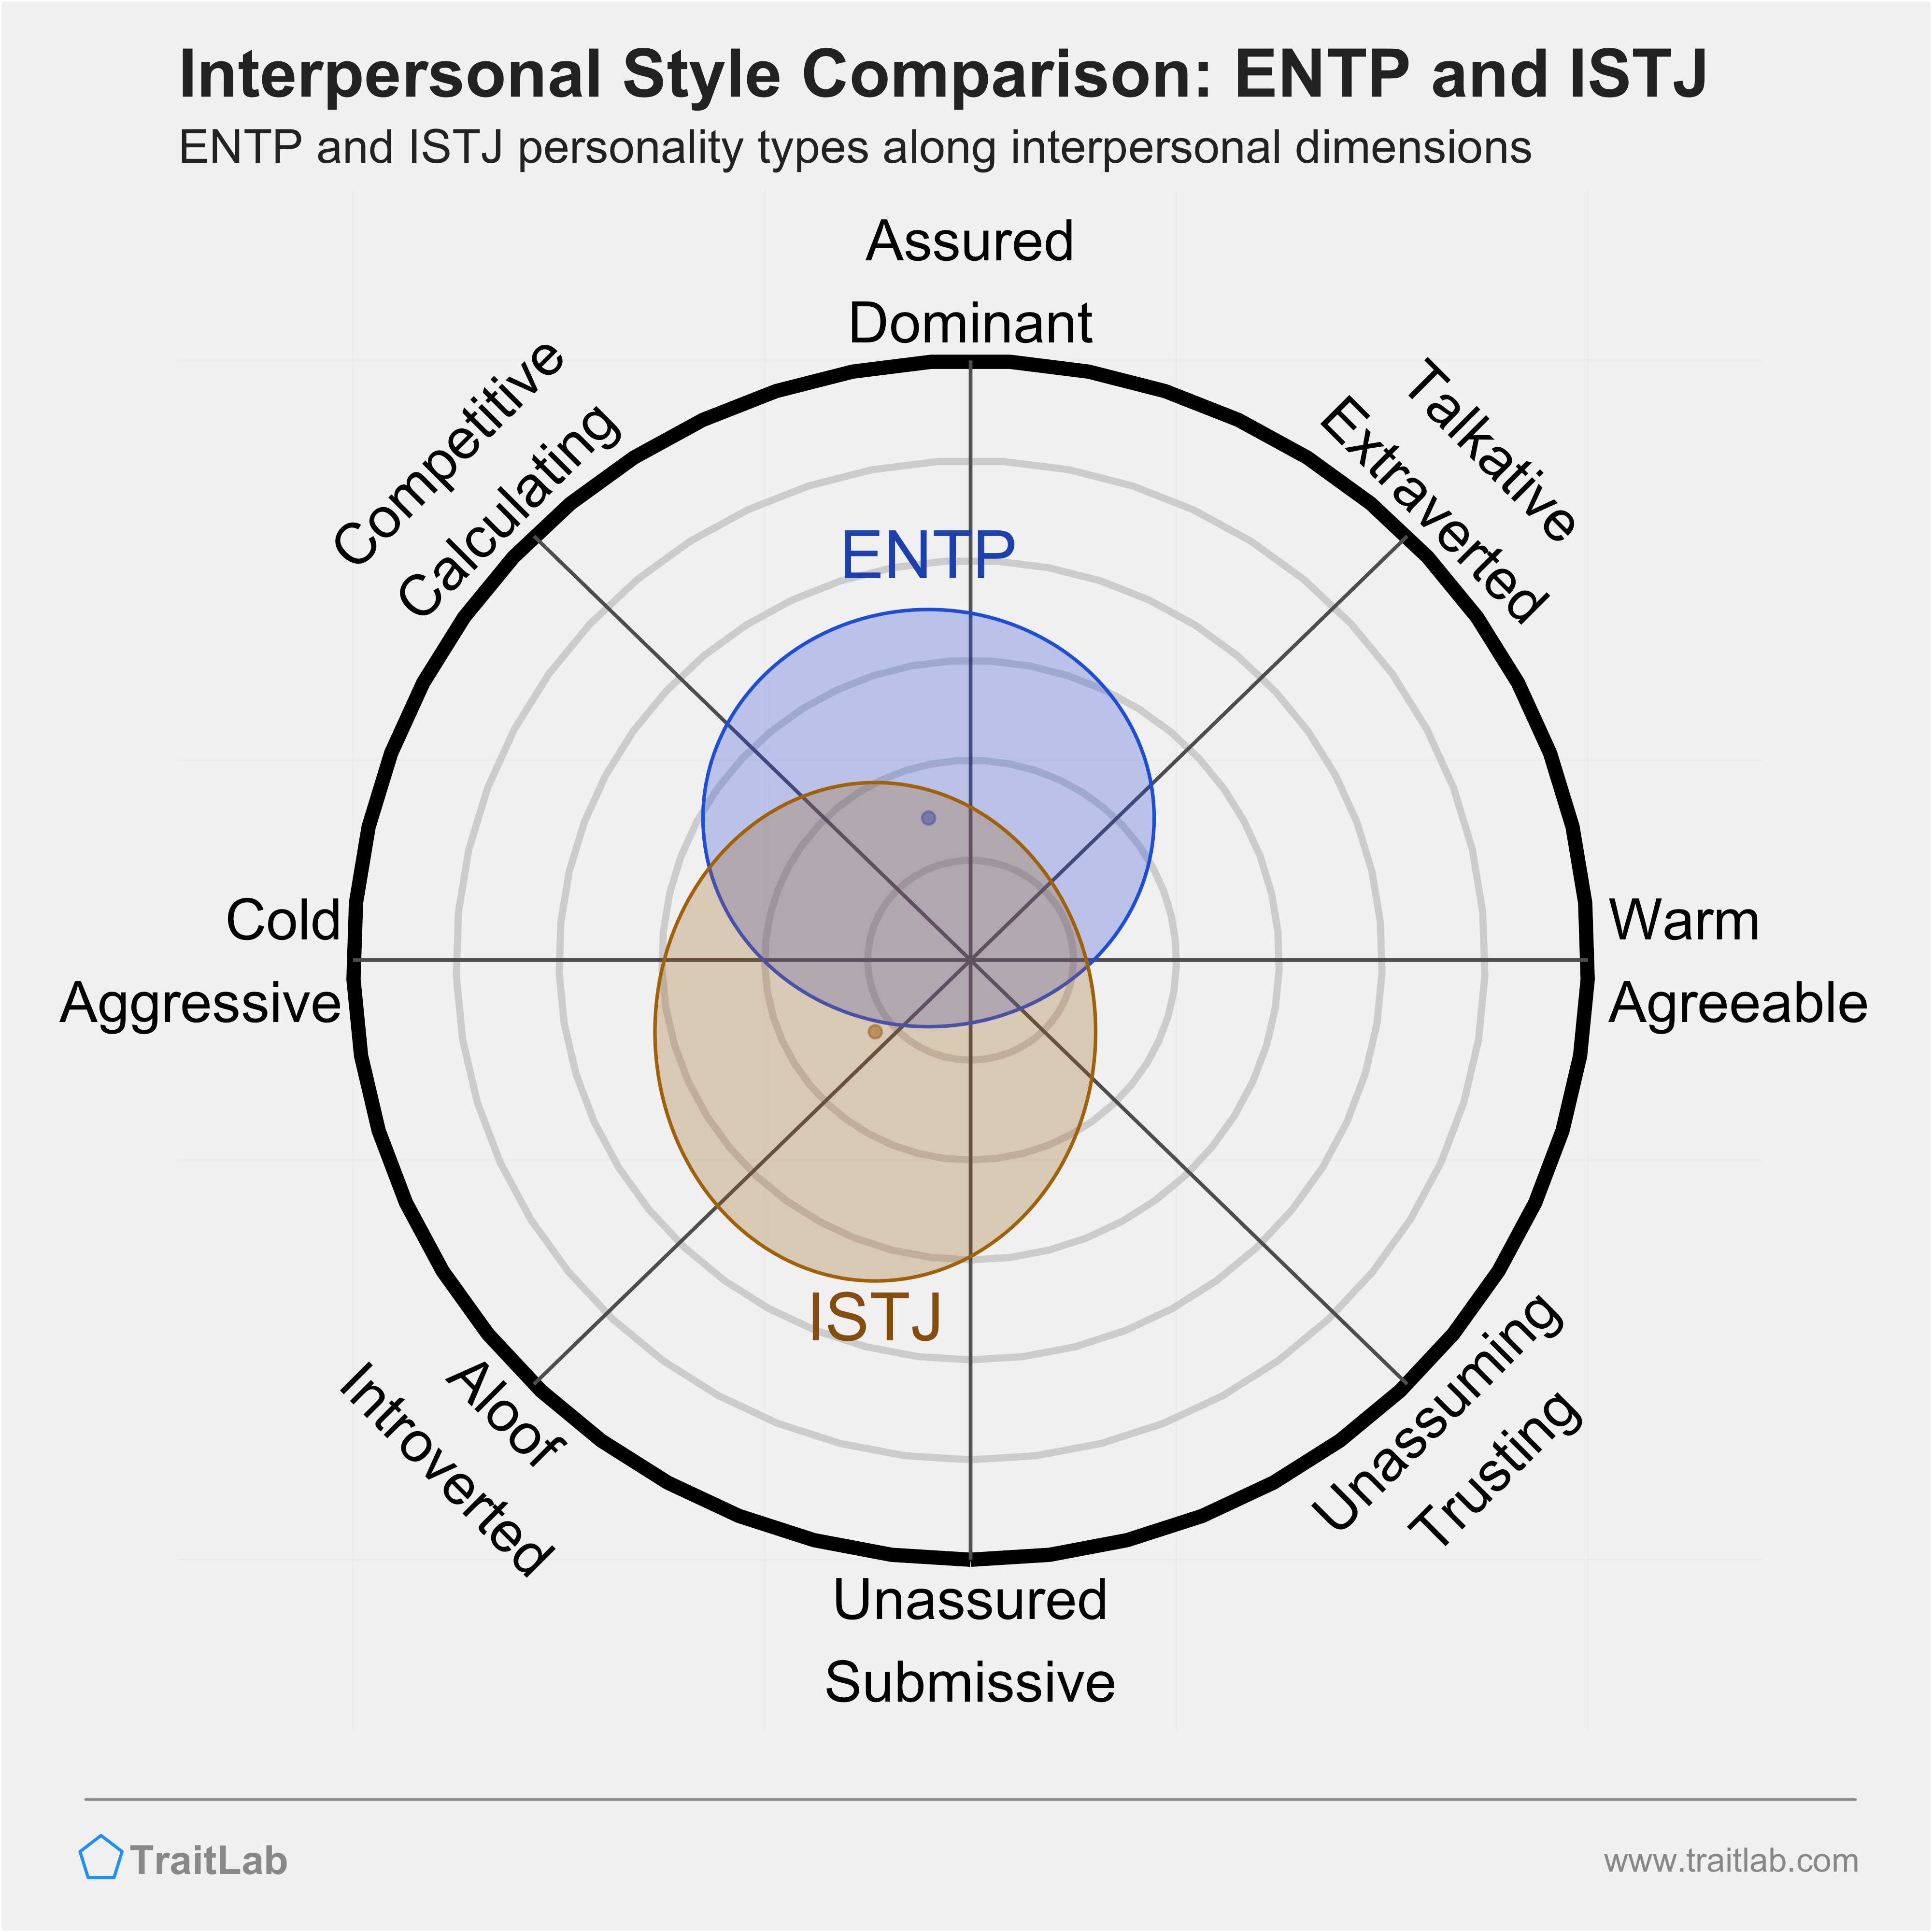 ENTP and ISTJ comparison across interpersonal dimensions